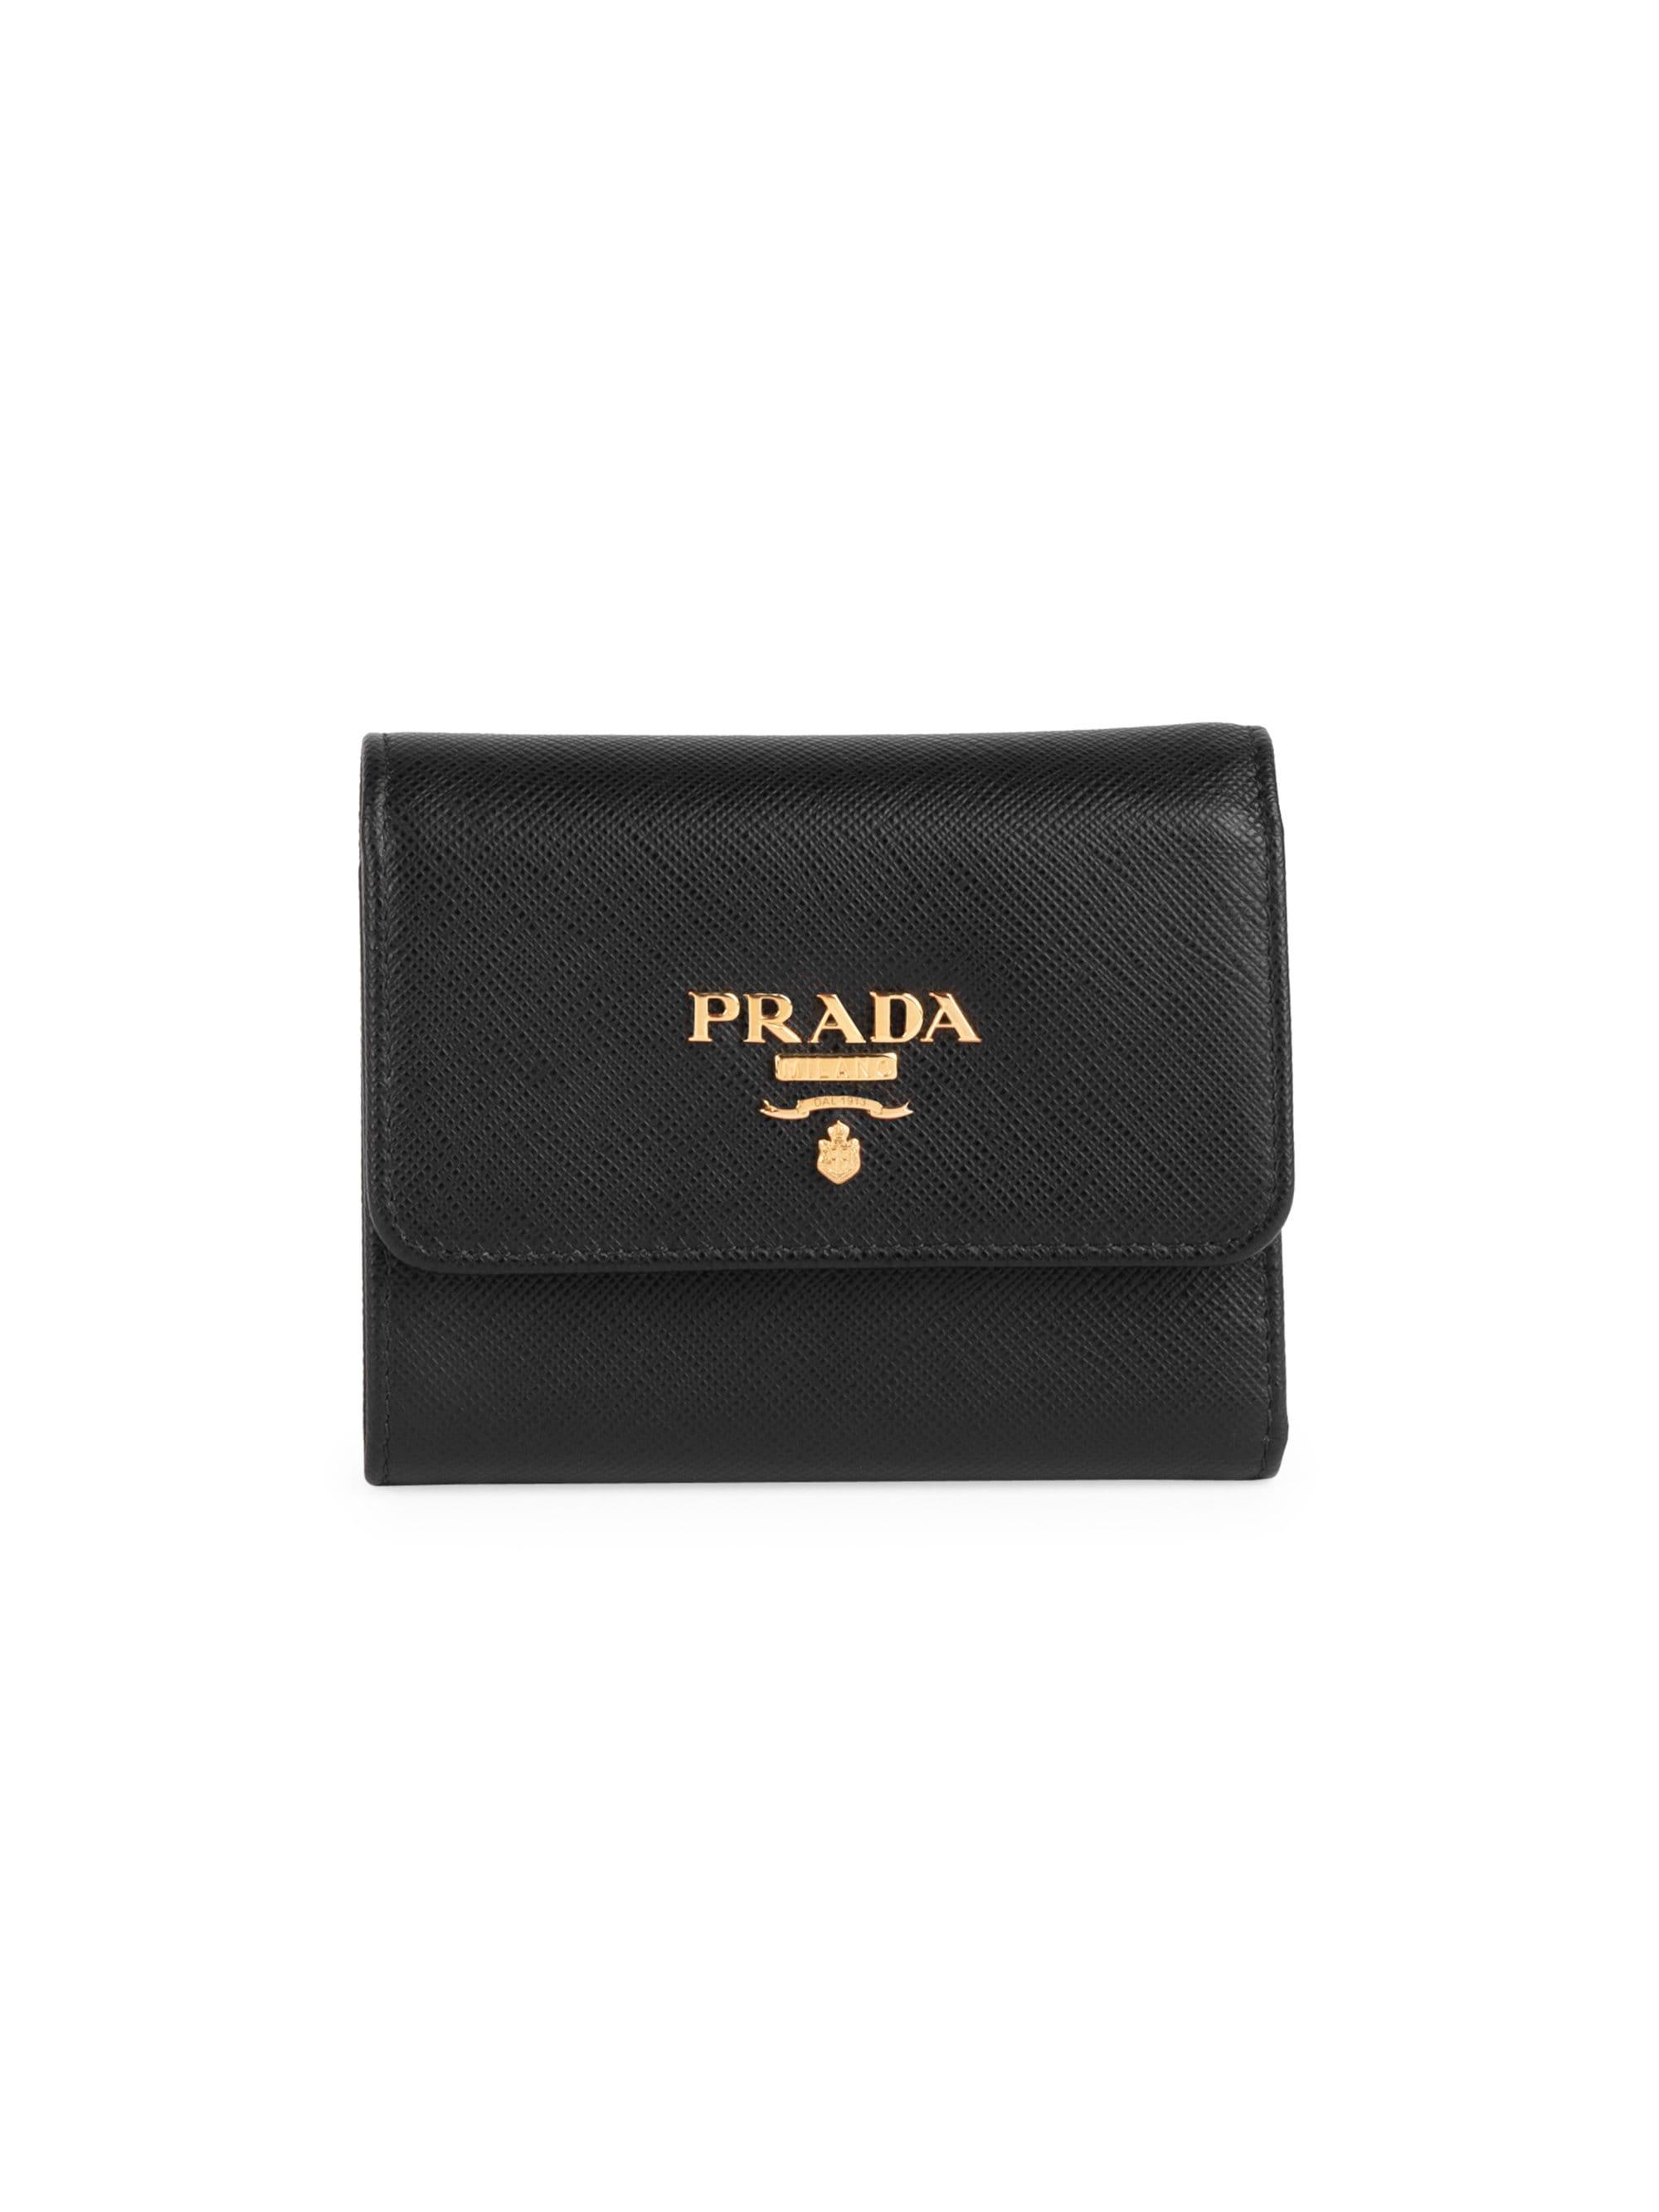 Prada Women's Small Saffiano Leather Continental Wallet - Black in ...